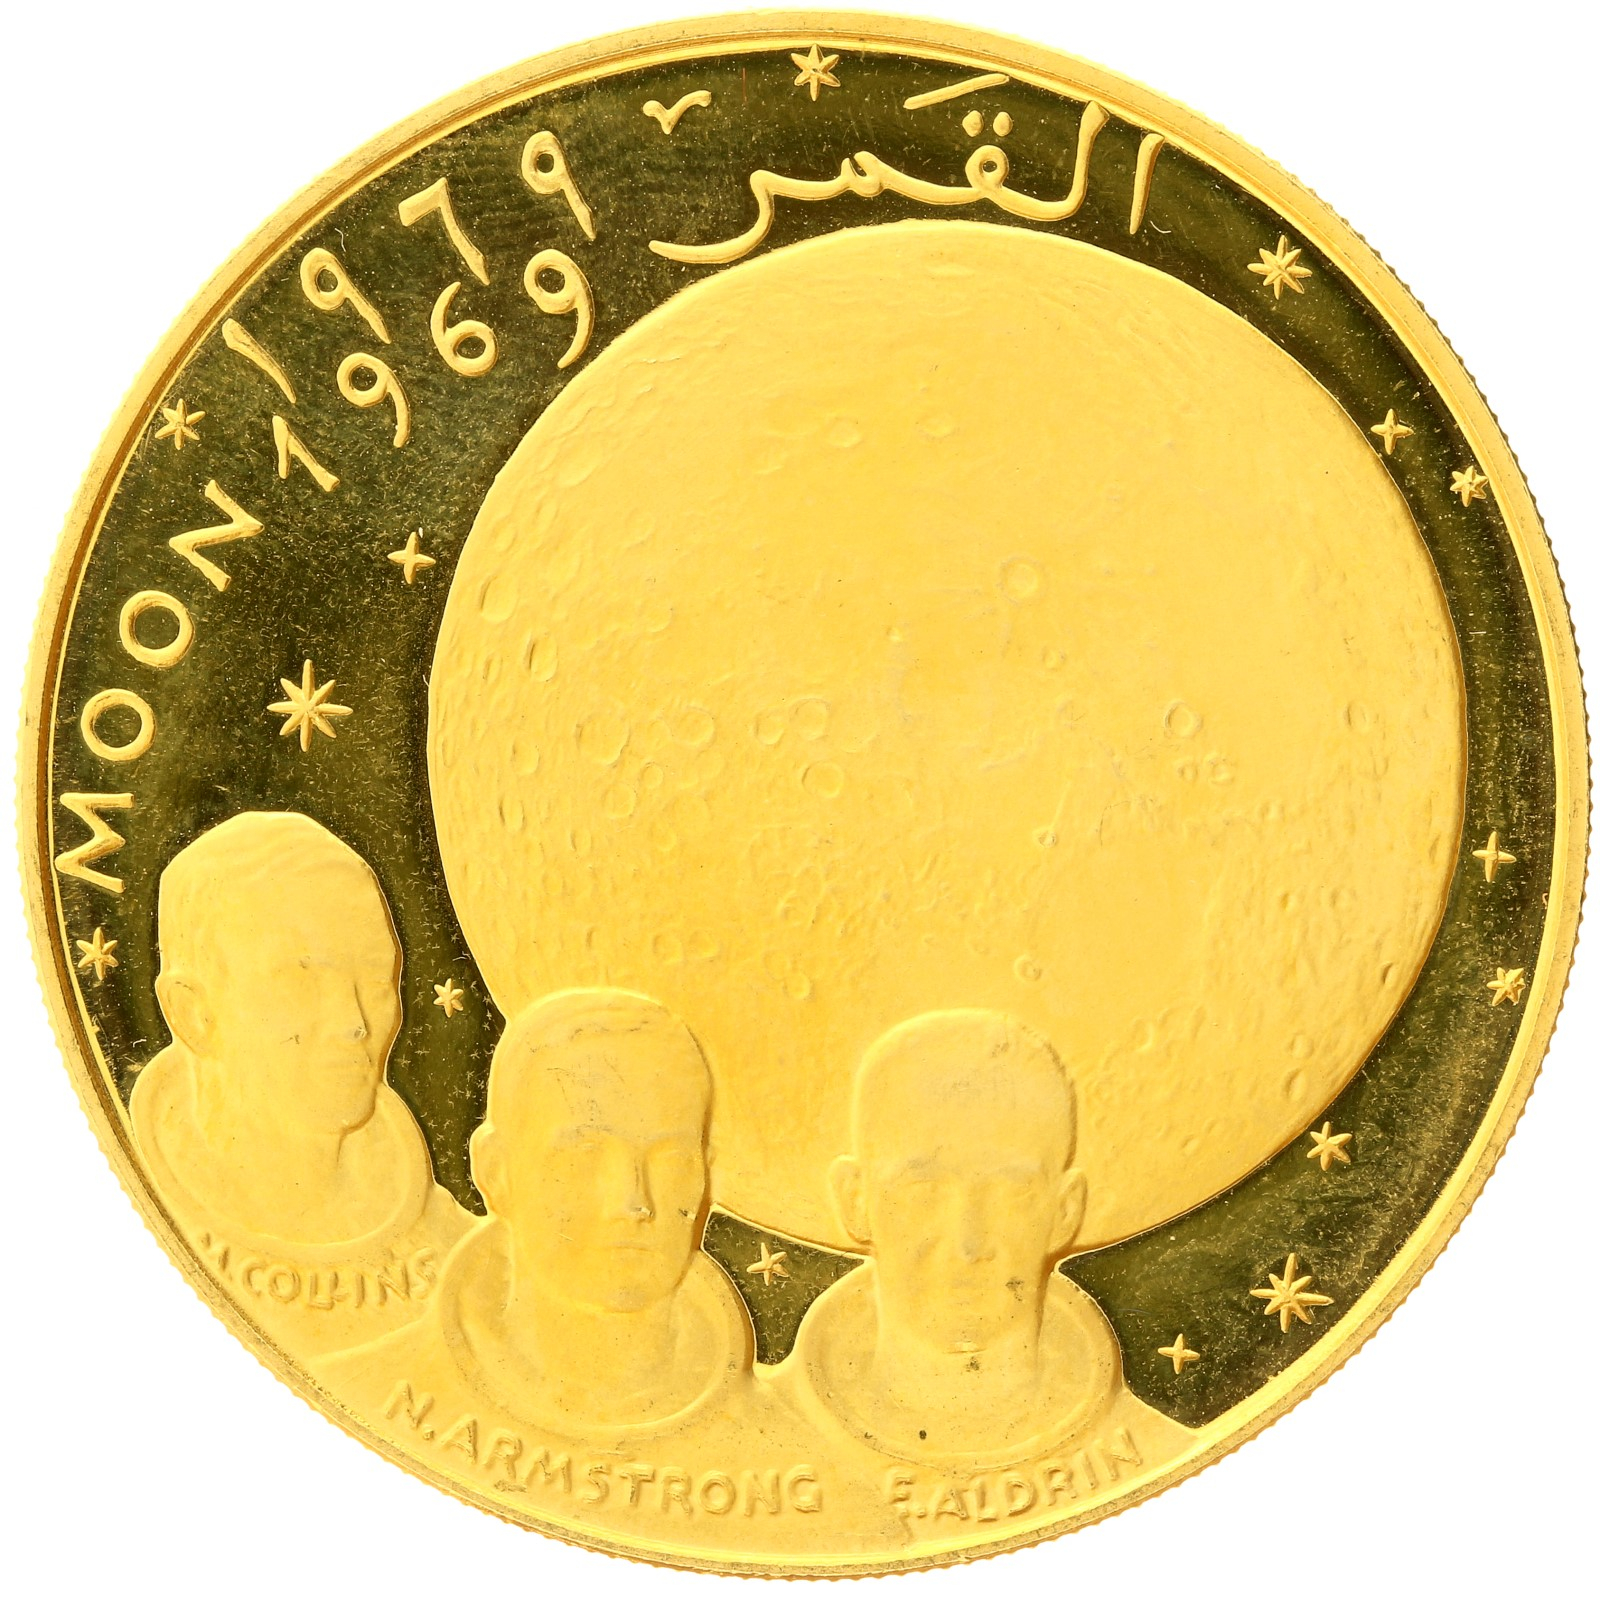 Fujairah - 100 Riyals - 1969 - Mohammed - Apollo XI